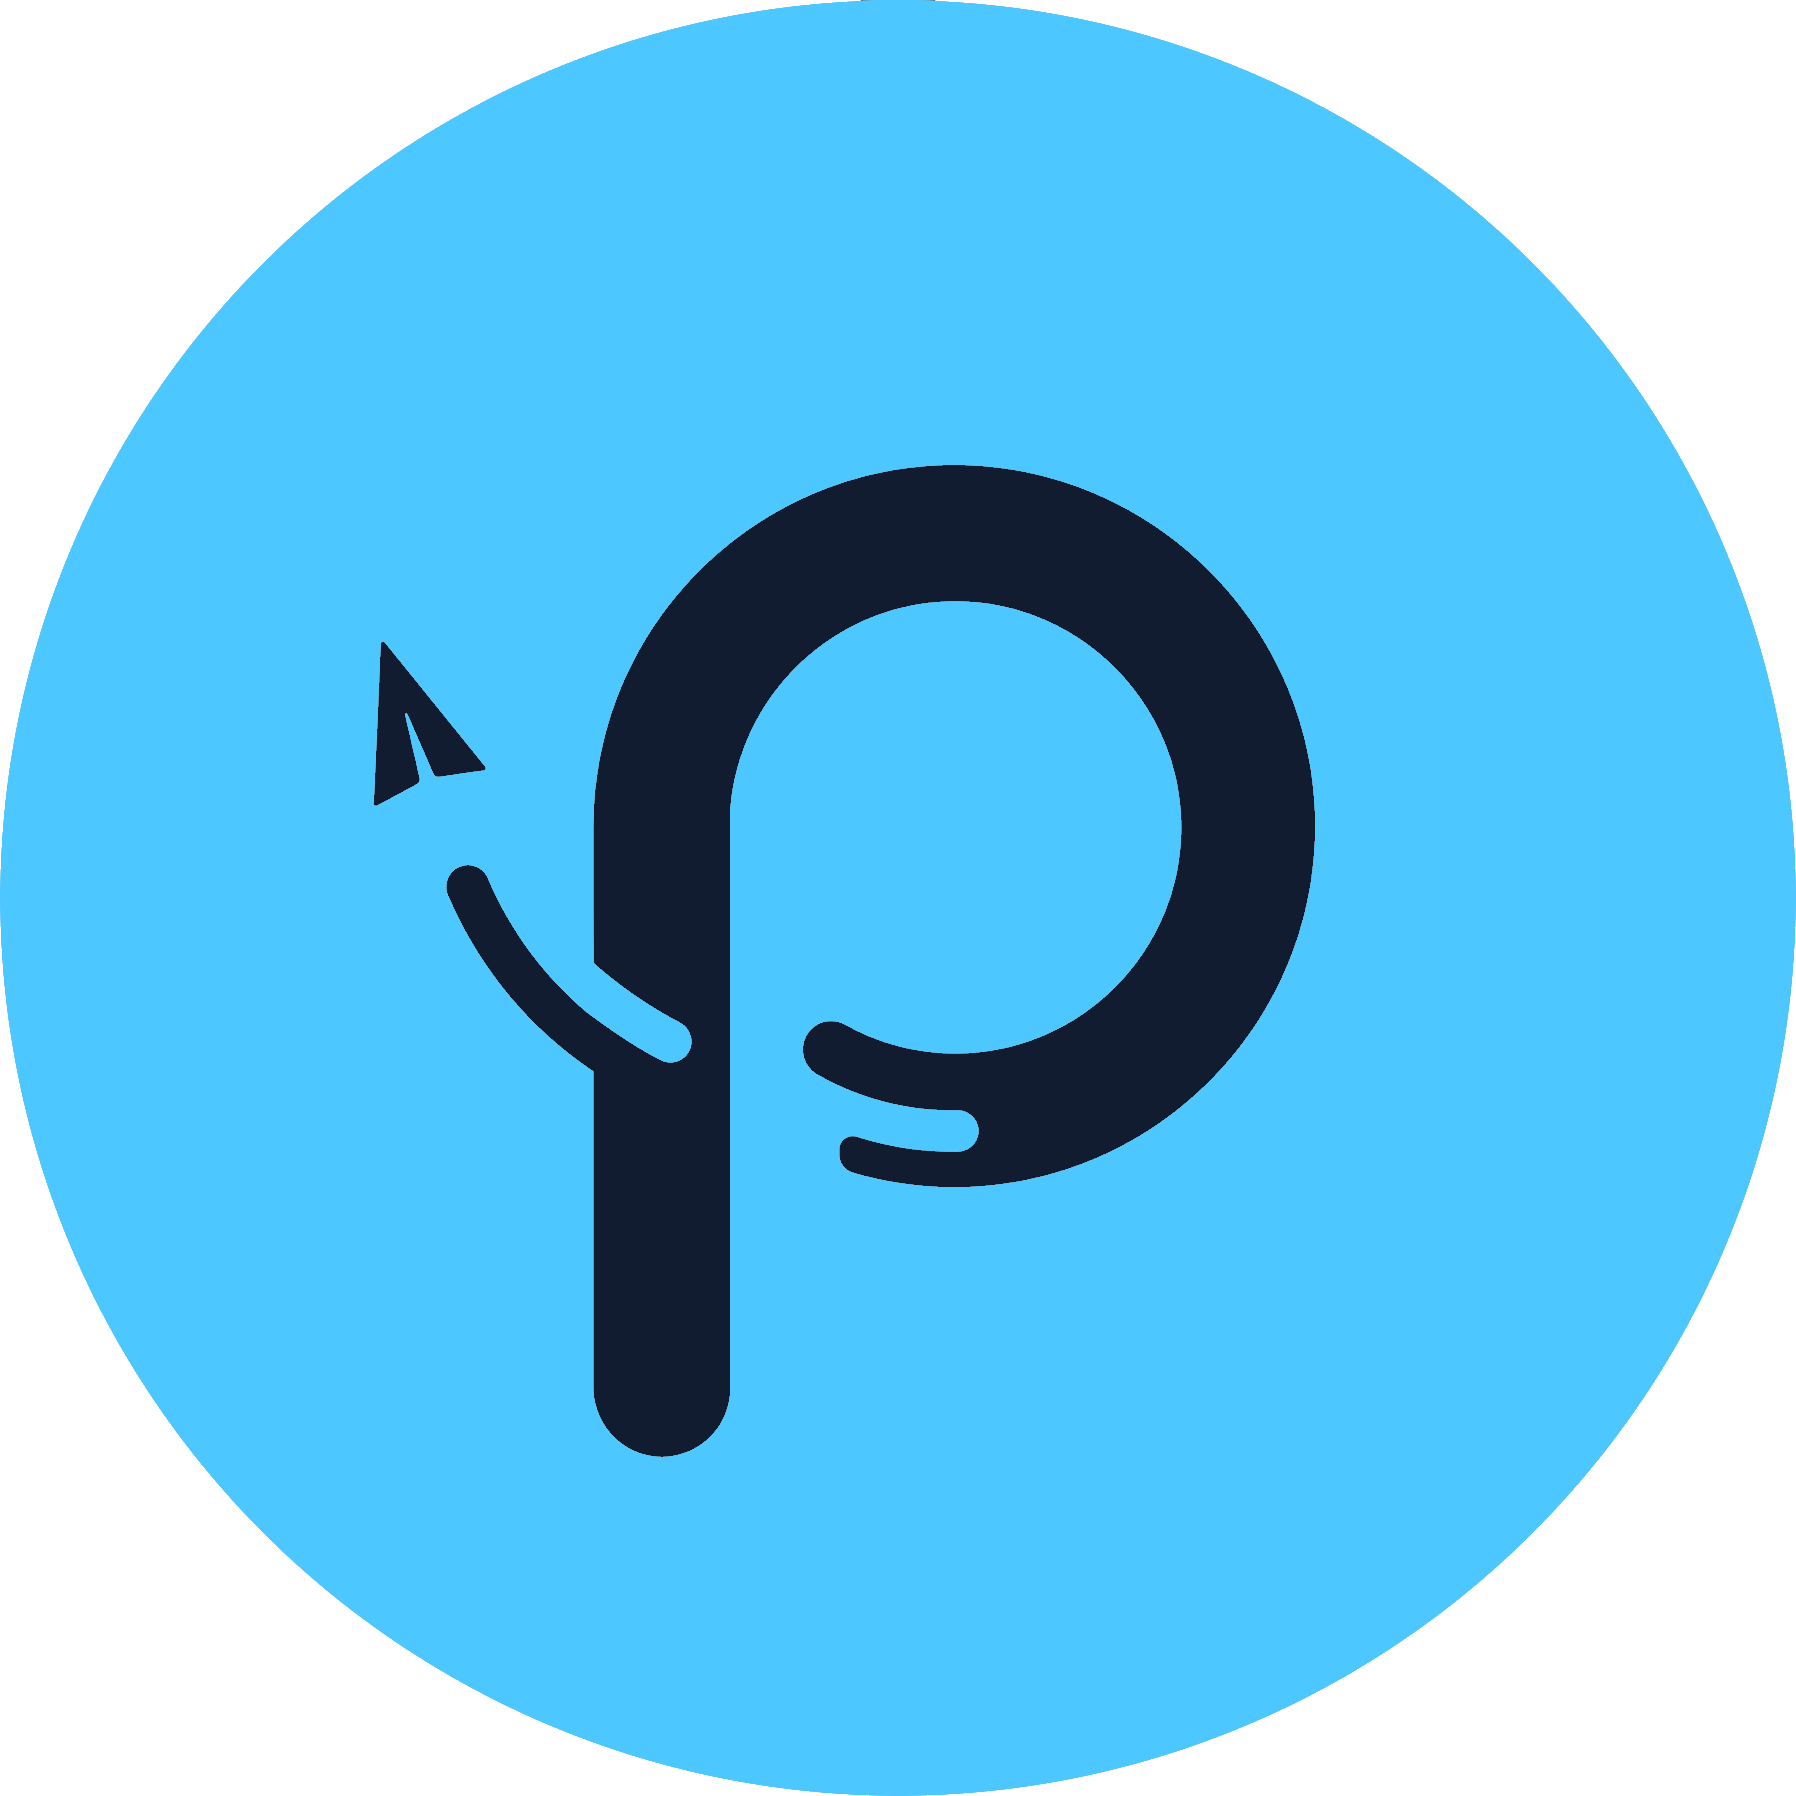 powerup icon